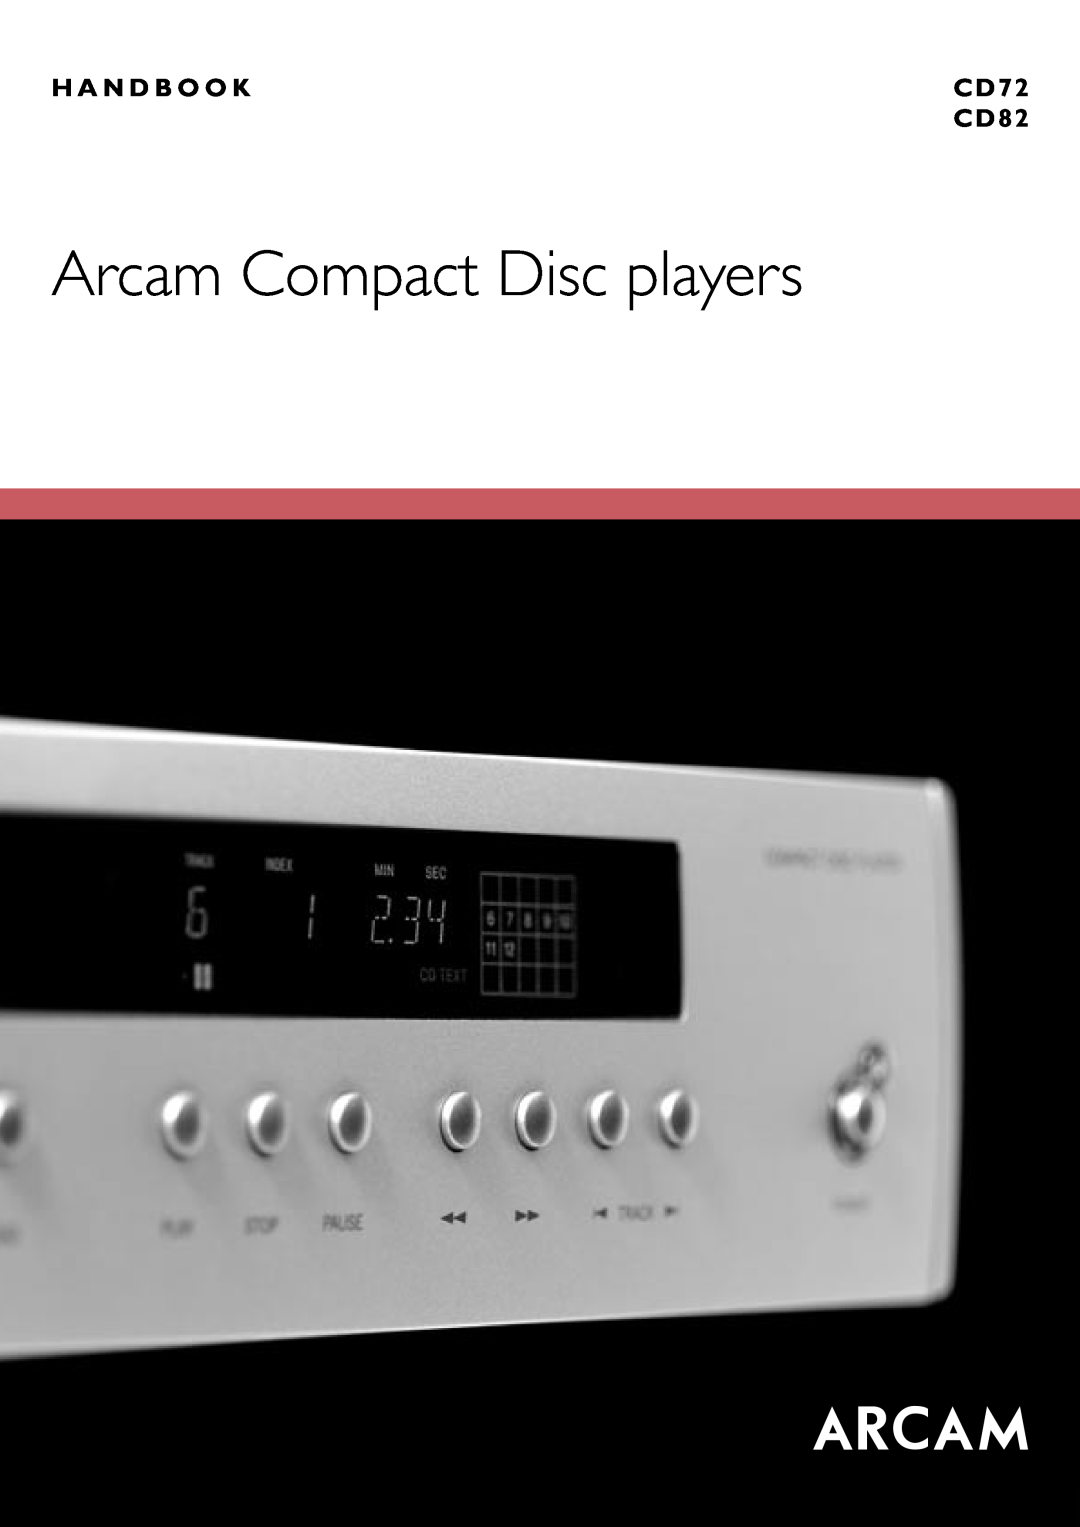 Arcam CD82 manual Arcam Compact Disc players, H A N D B O O K, CD72 